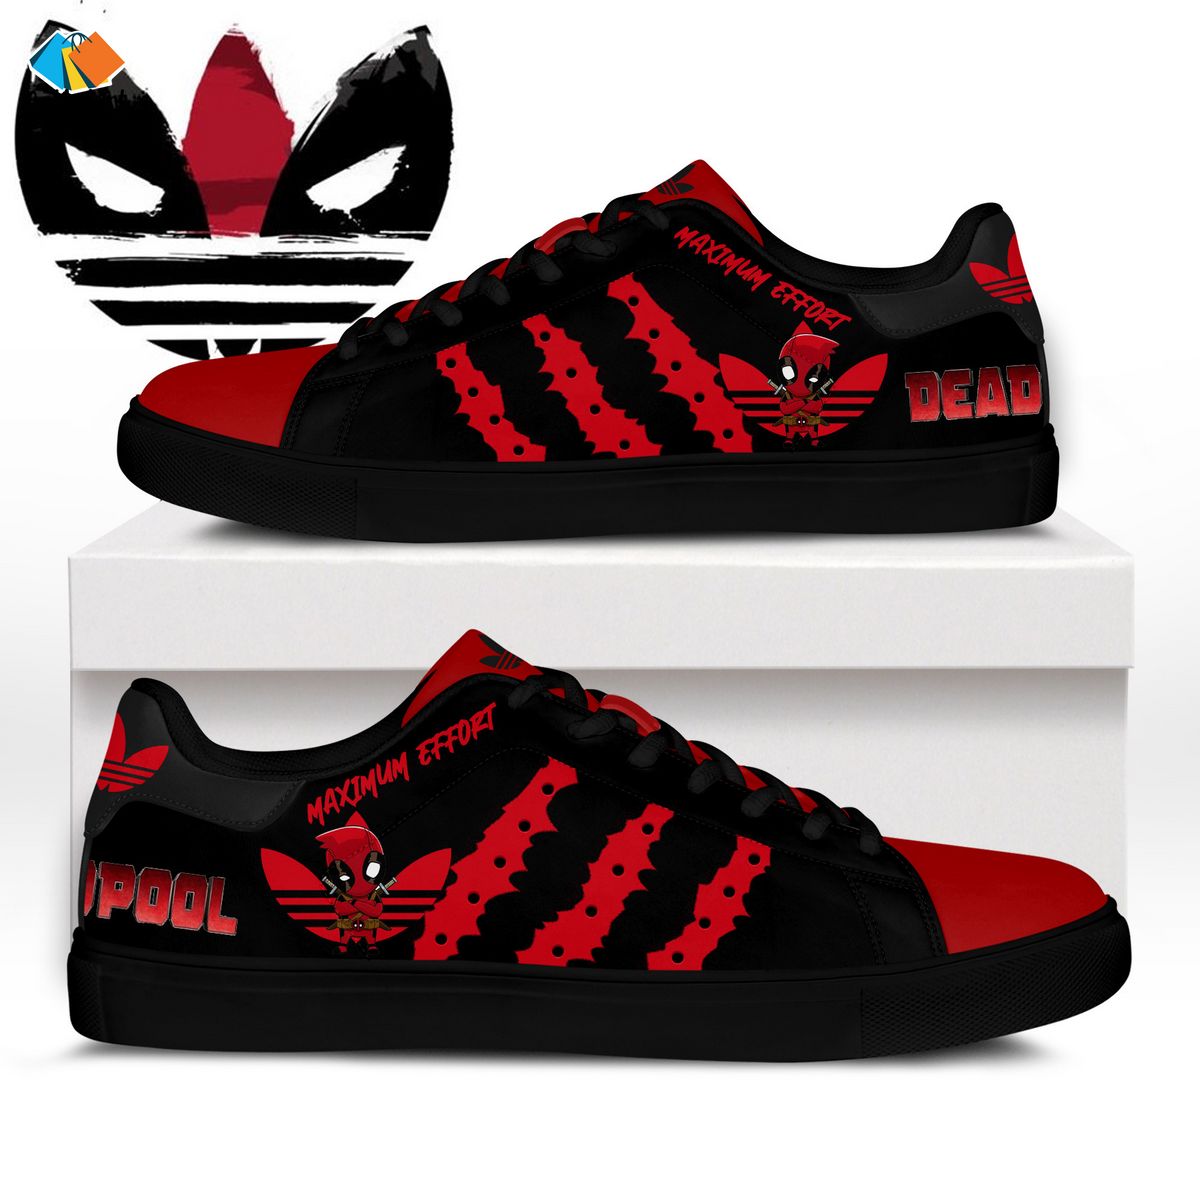 Deadpool Maximum Effort Adidas Stan Smith Shoes